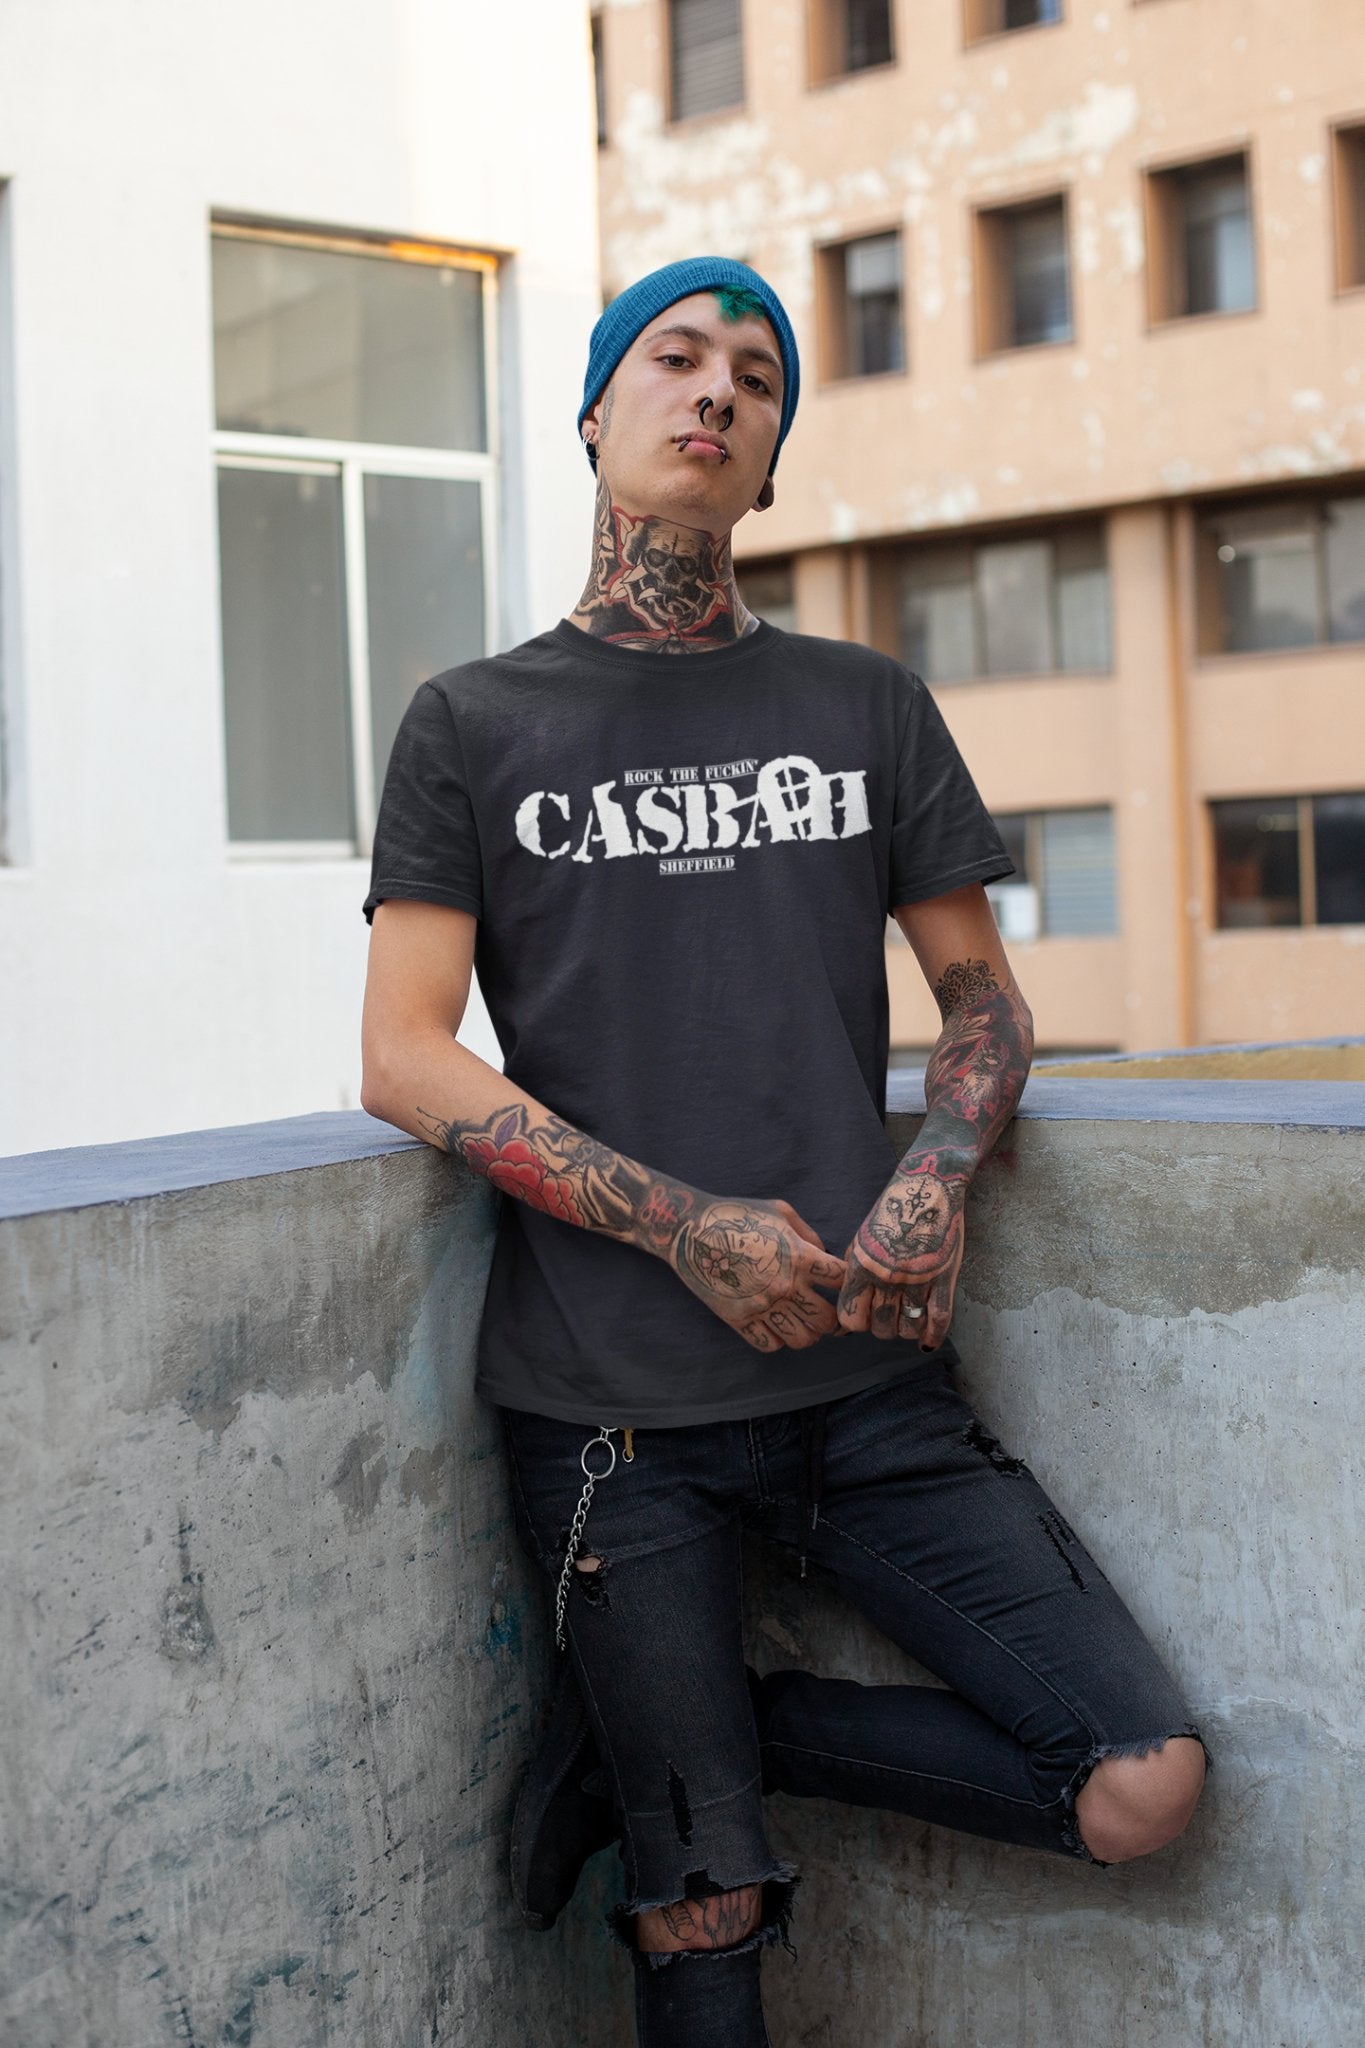 Casbah unisex fit T-shirt - various colours - Dirty Stop Outs